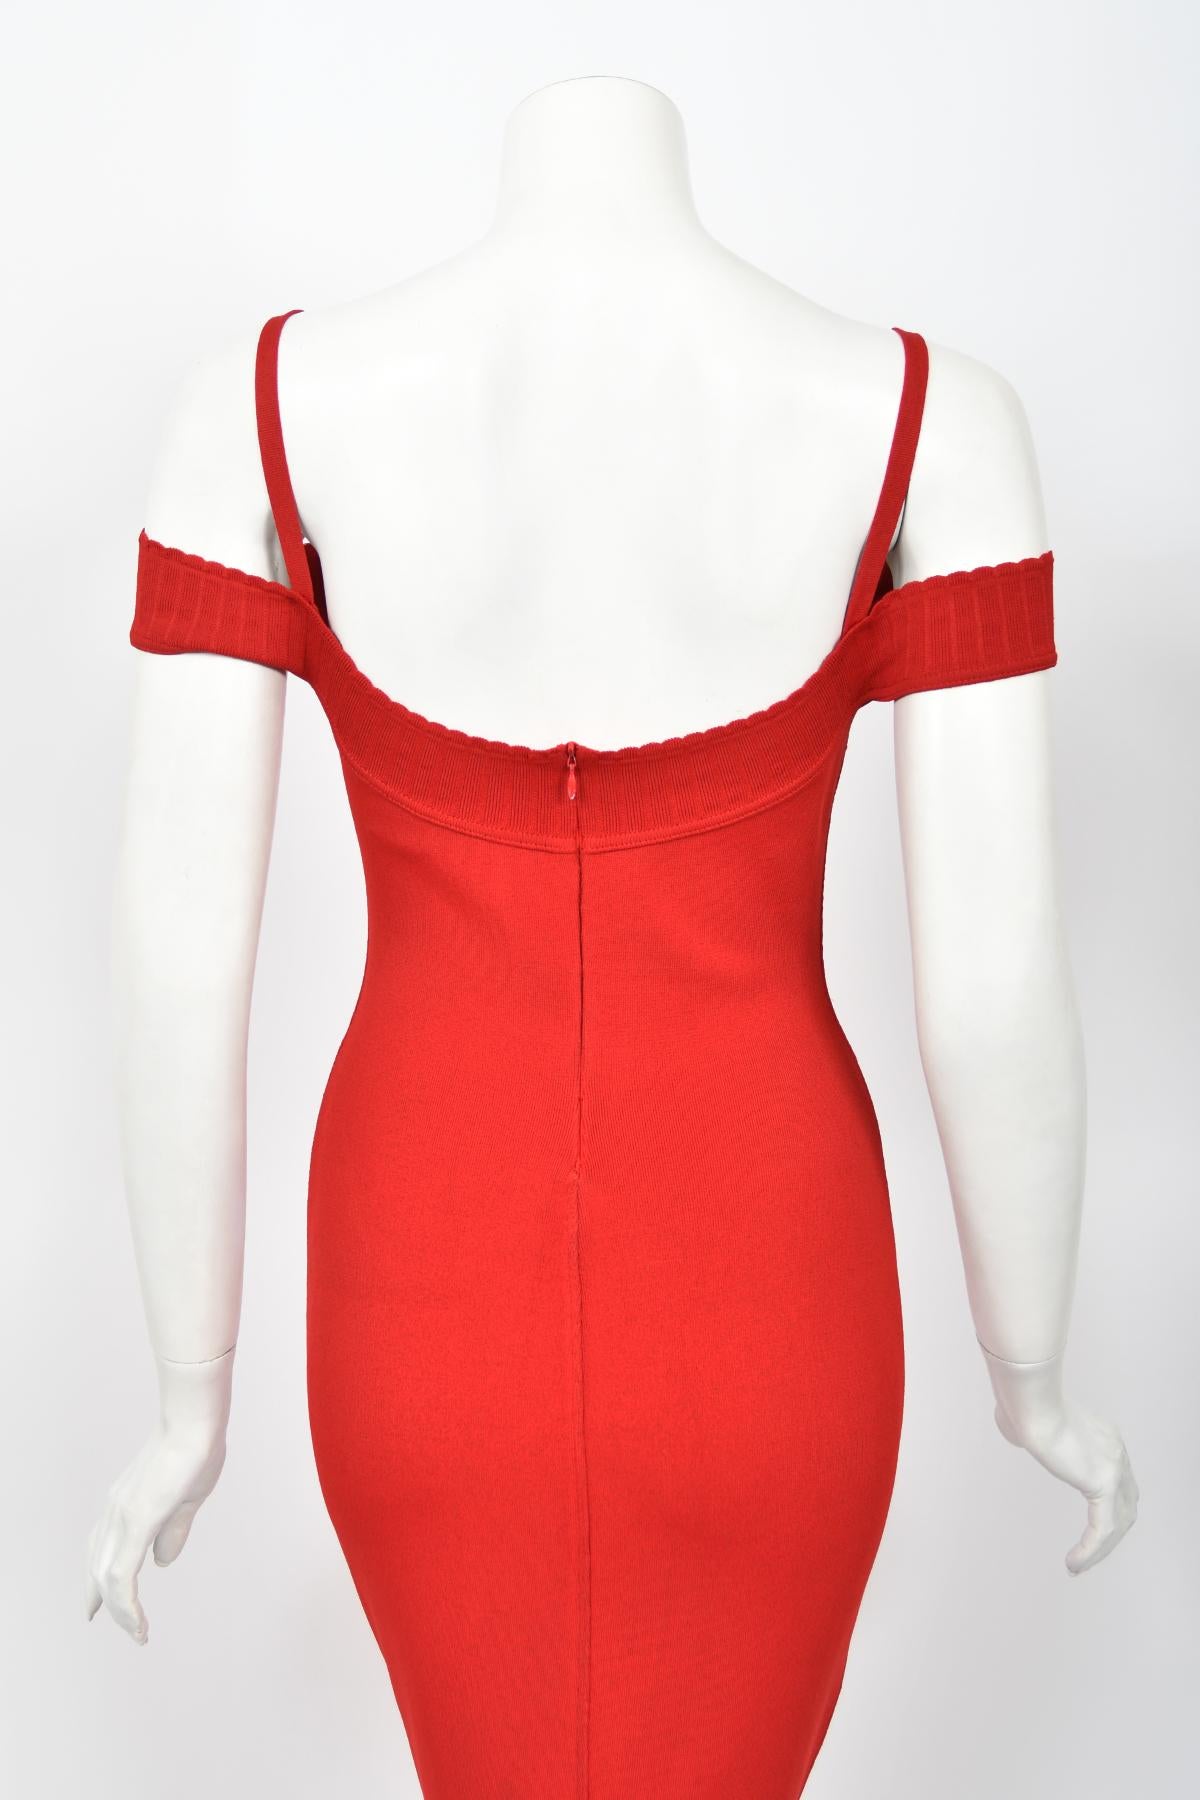 1992 Azzedine Alaia Red Stretch Knit Cold-Shoulder Bodycon Hourglass Maxi Dress 12